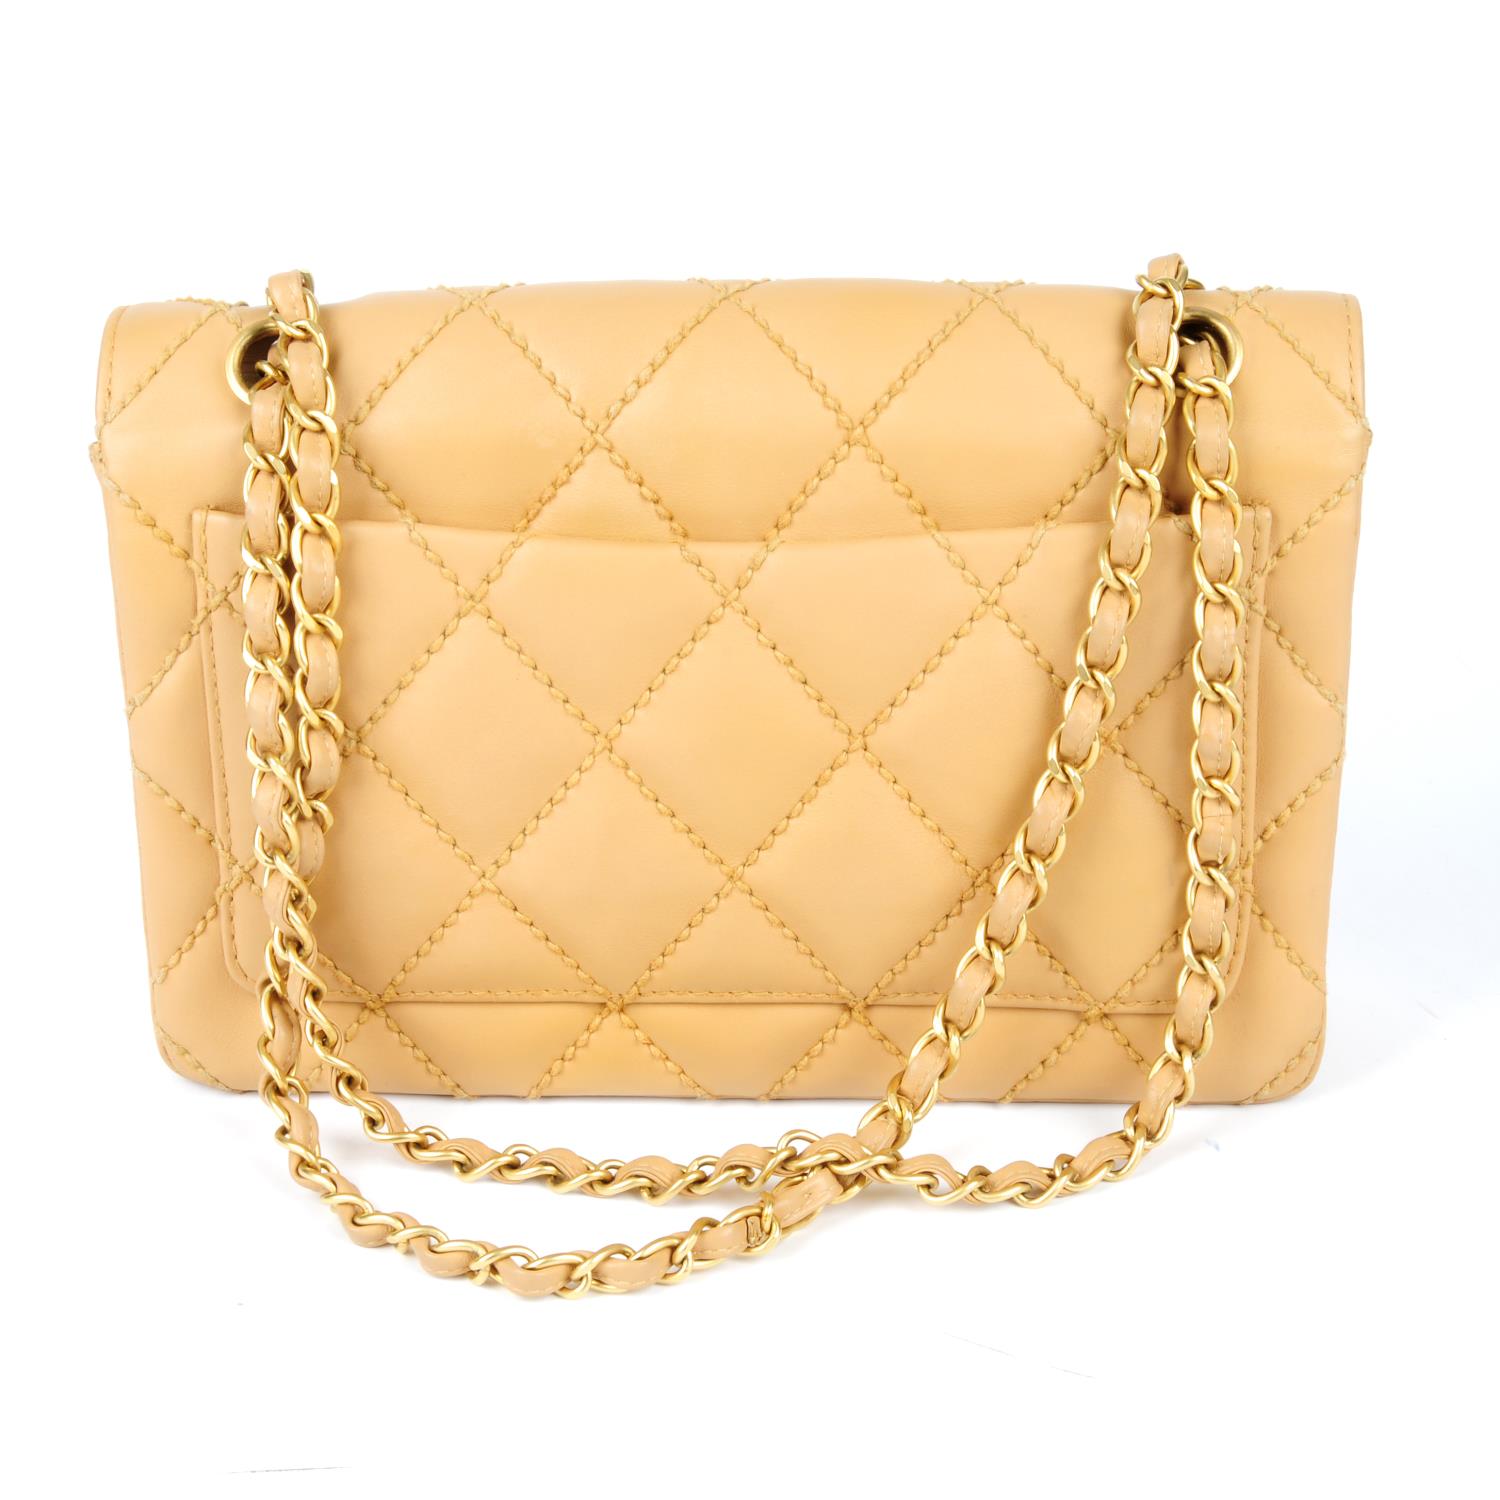 CHANEL - a Medium Single Flap handbag. - Image 2 of 4